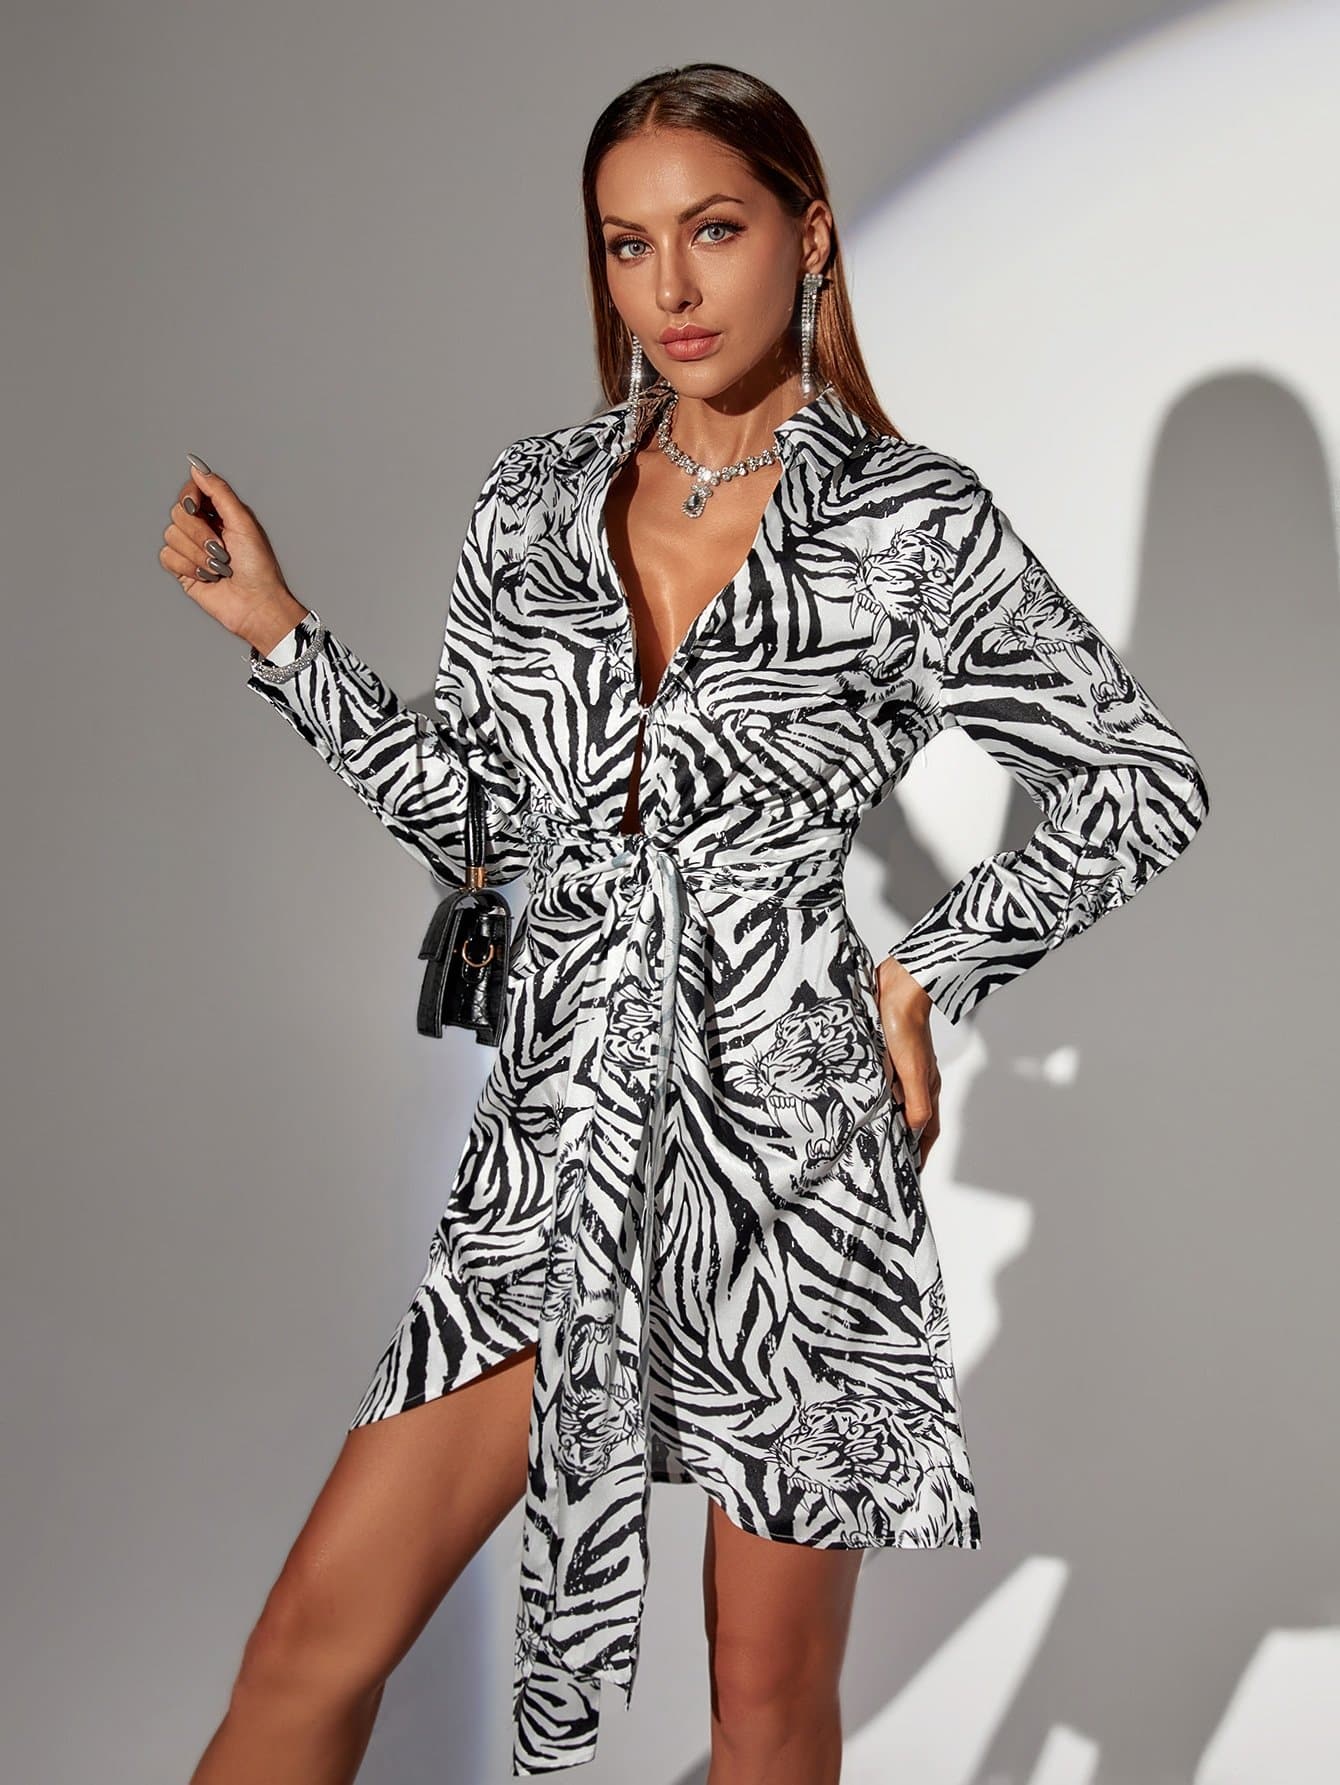 Black White Tiger Zebra Striped Print Tie Front Shirt Dress